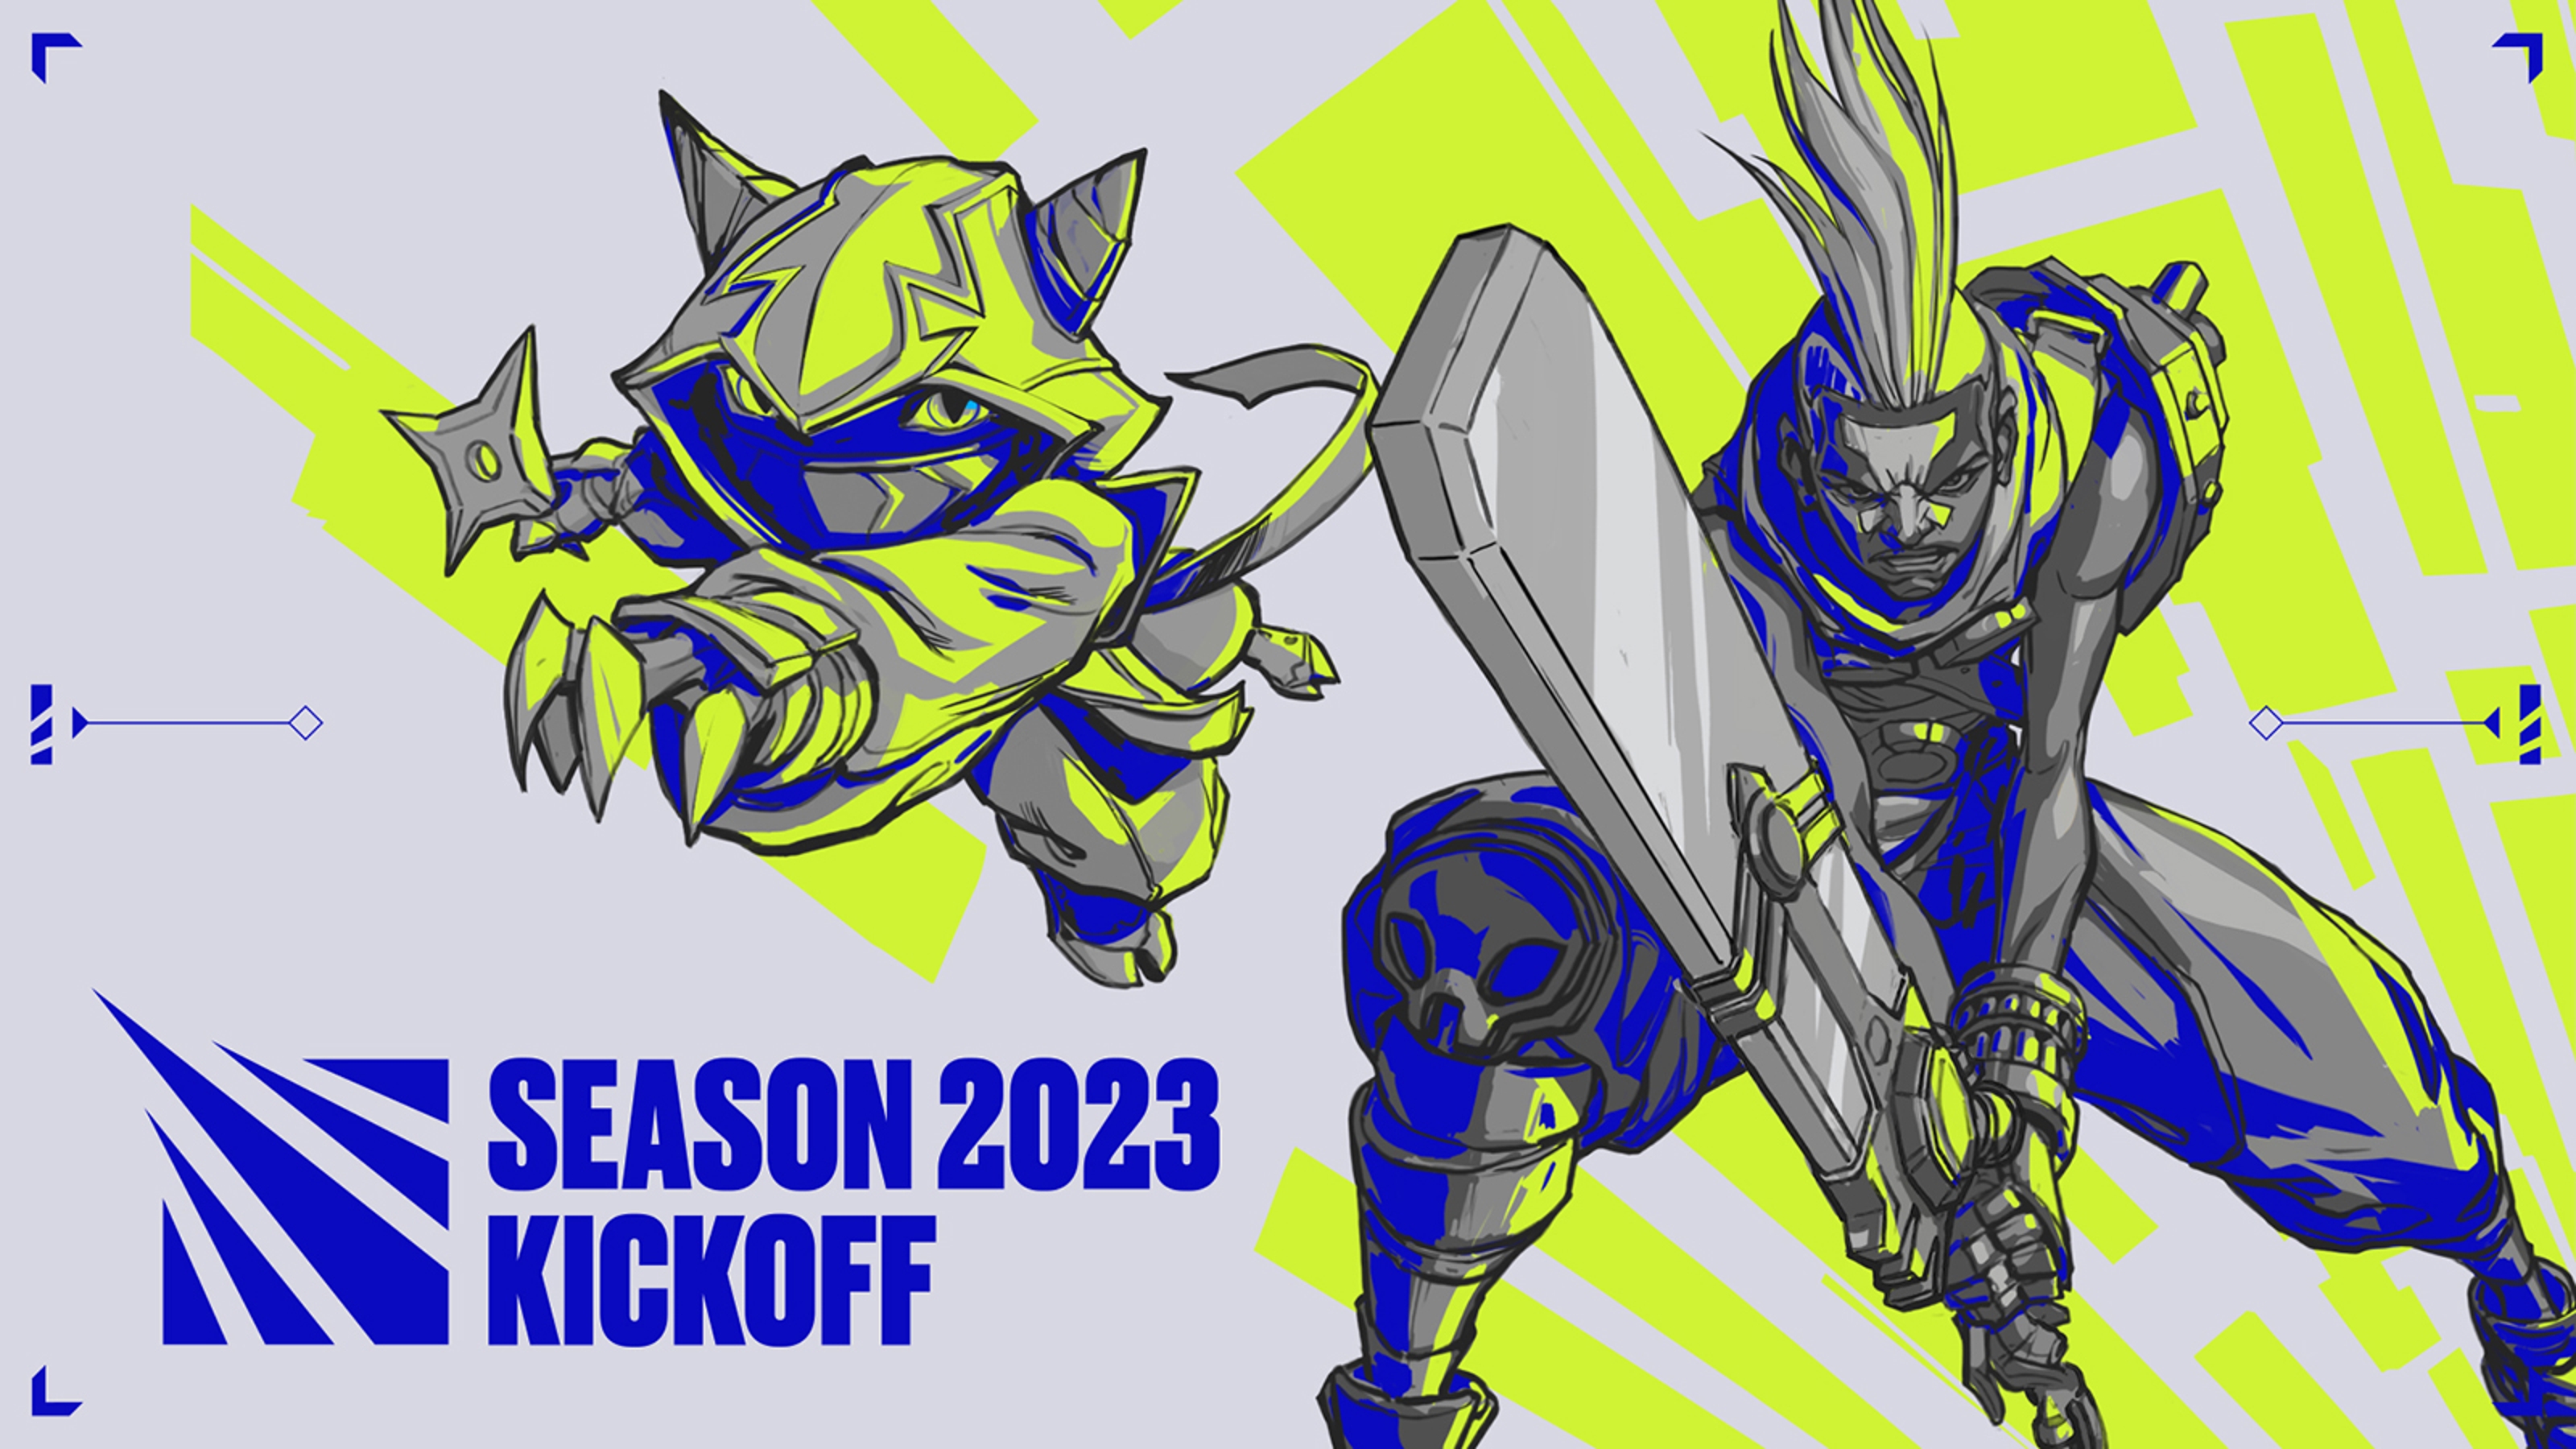 LoL Season 2023 Kickoff event splash art